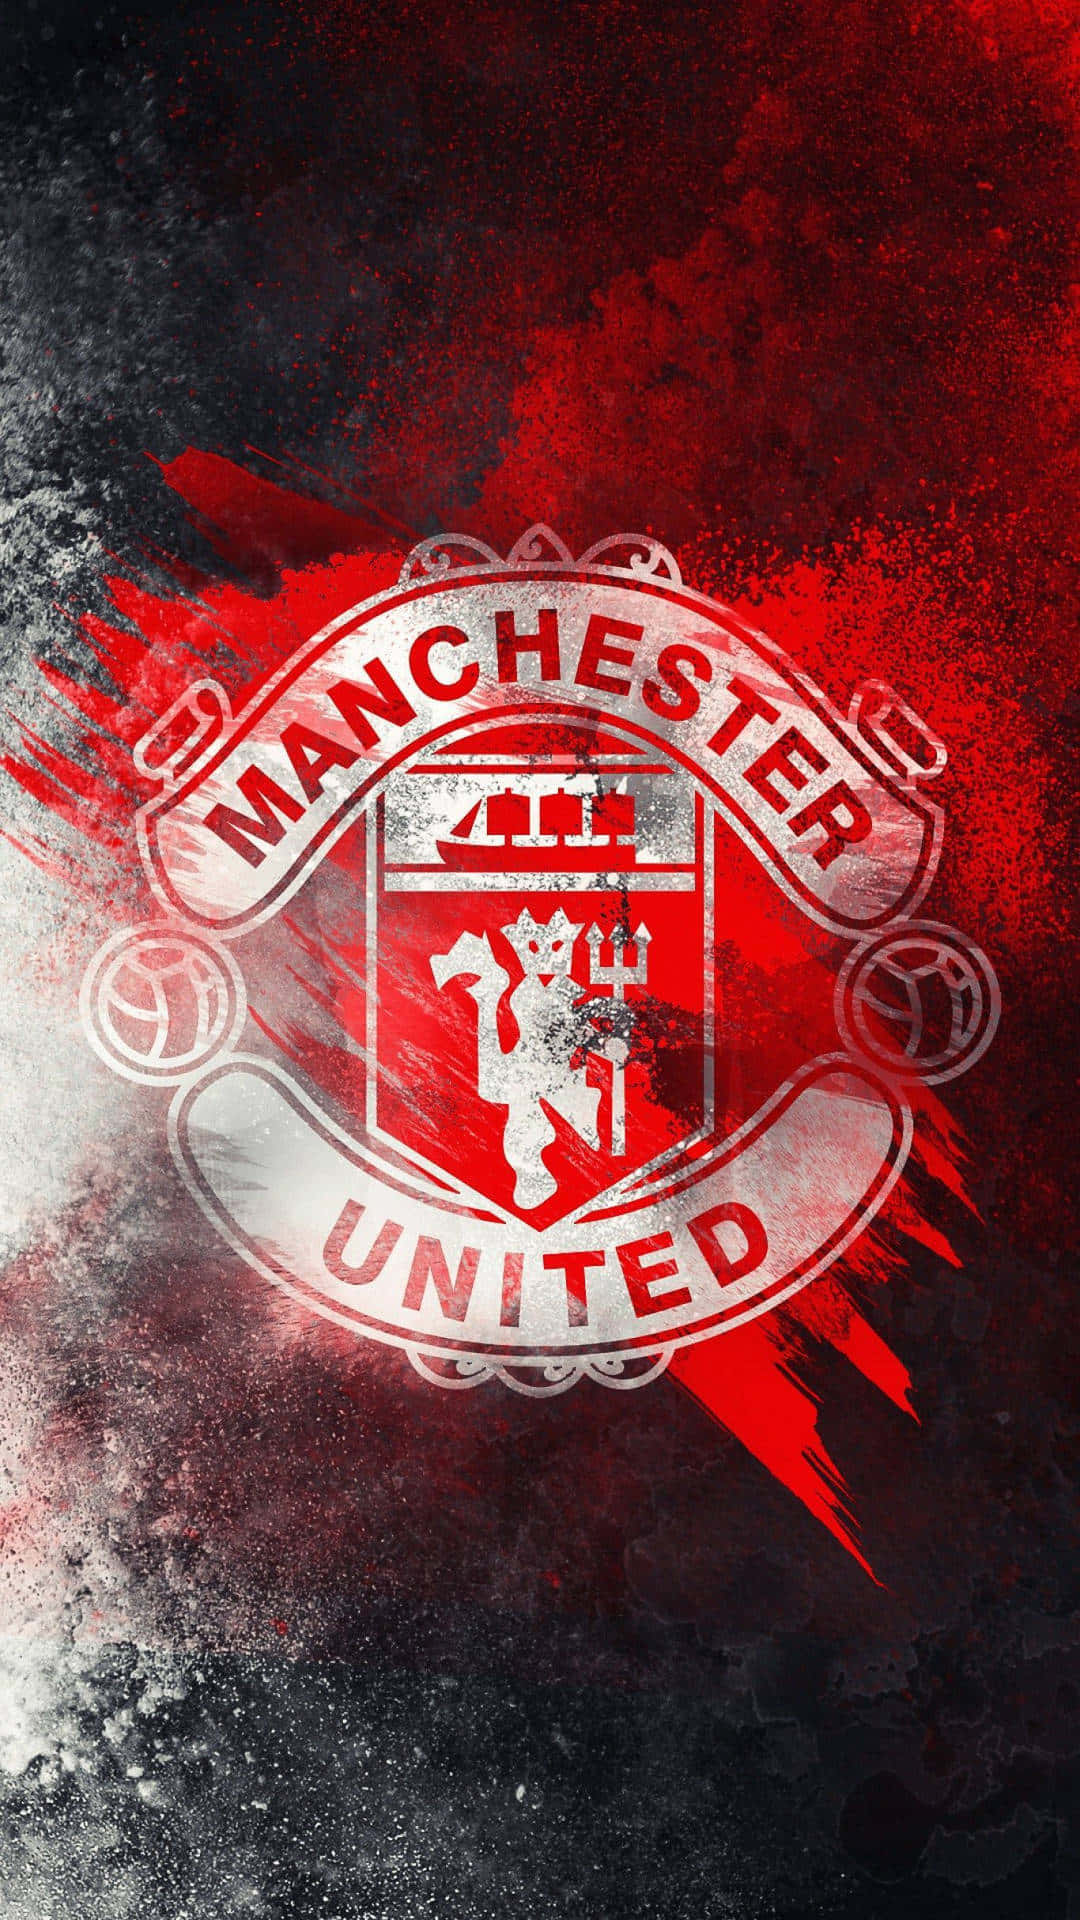 Manchester United samler verdensklasse fodbold talenter sammen. Wallpaper